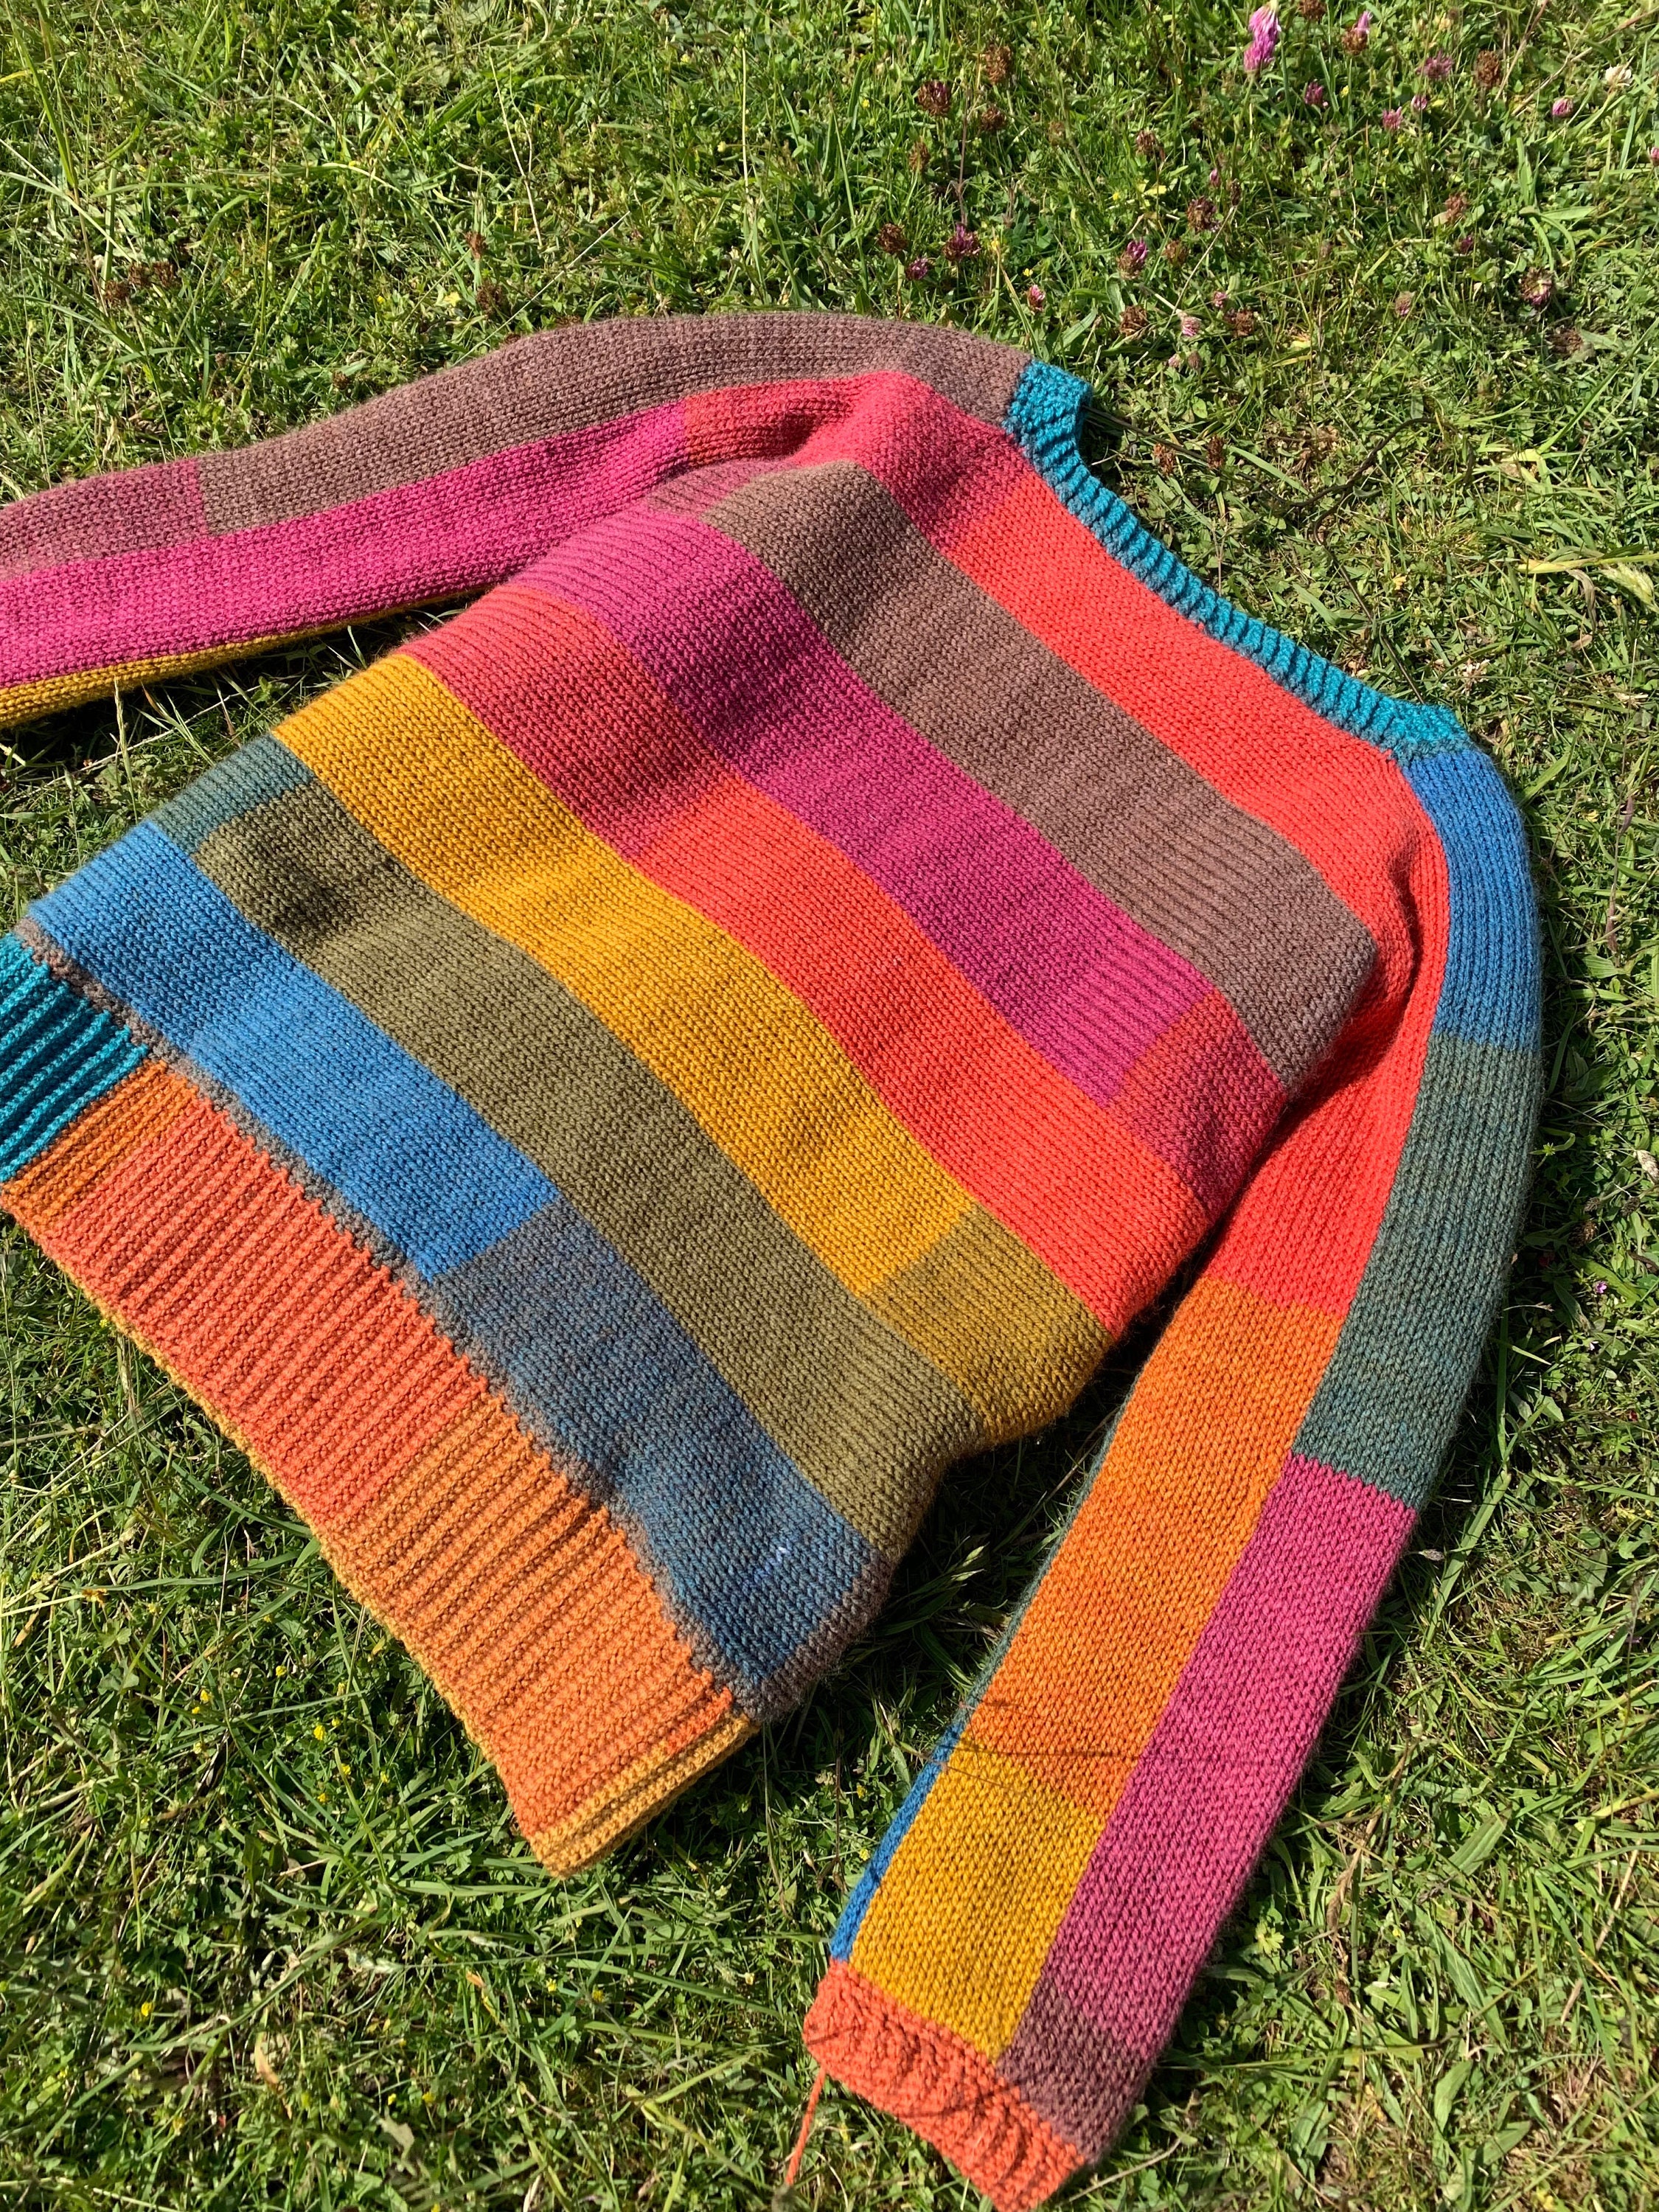 Sentro 48 knitting pattern sweater with Velvet yarn - Knitting Machine  patterns